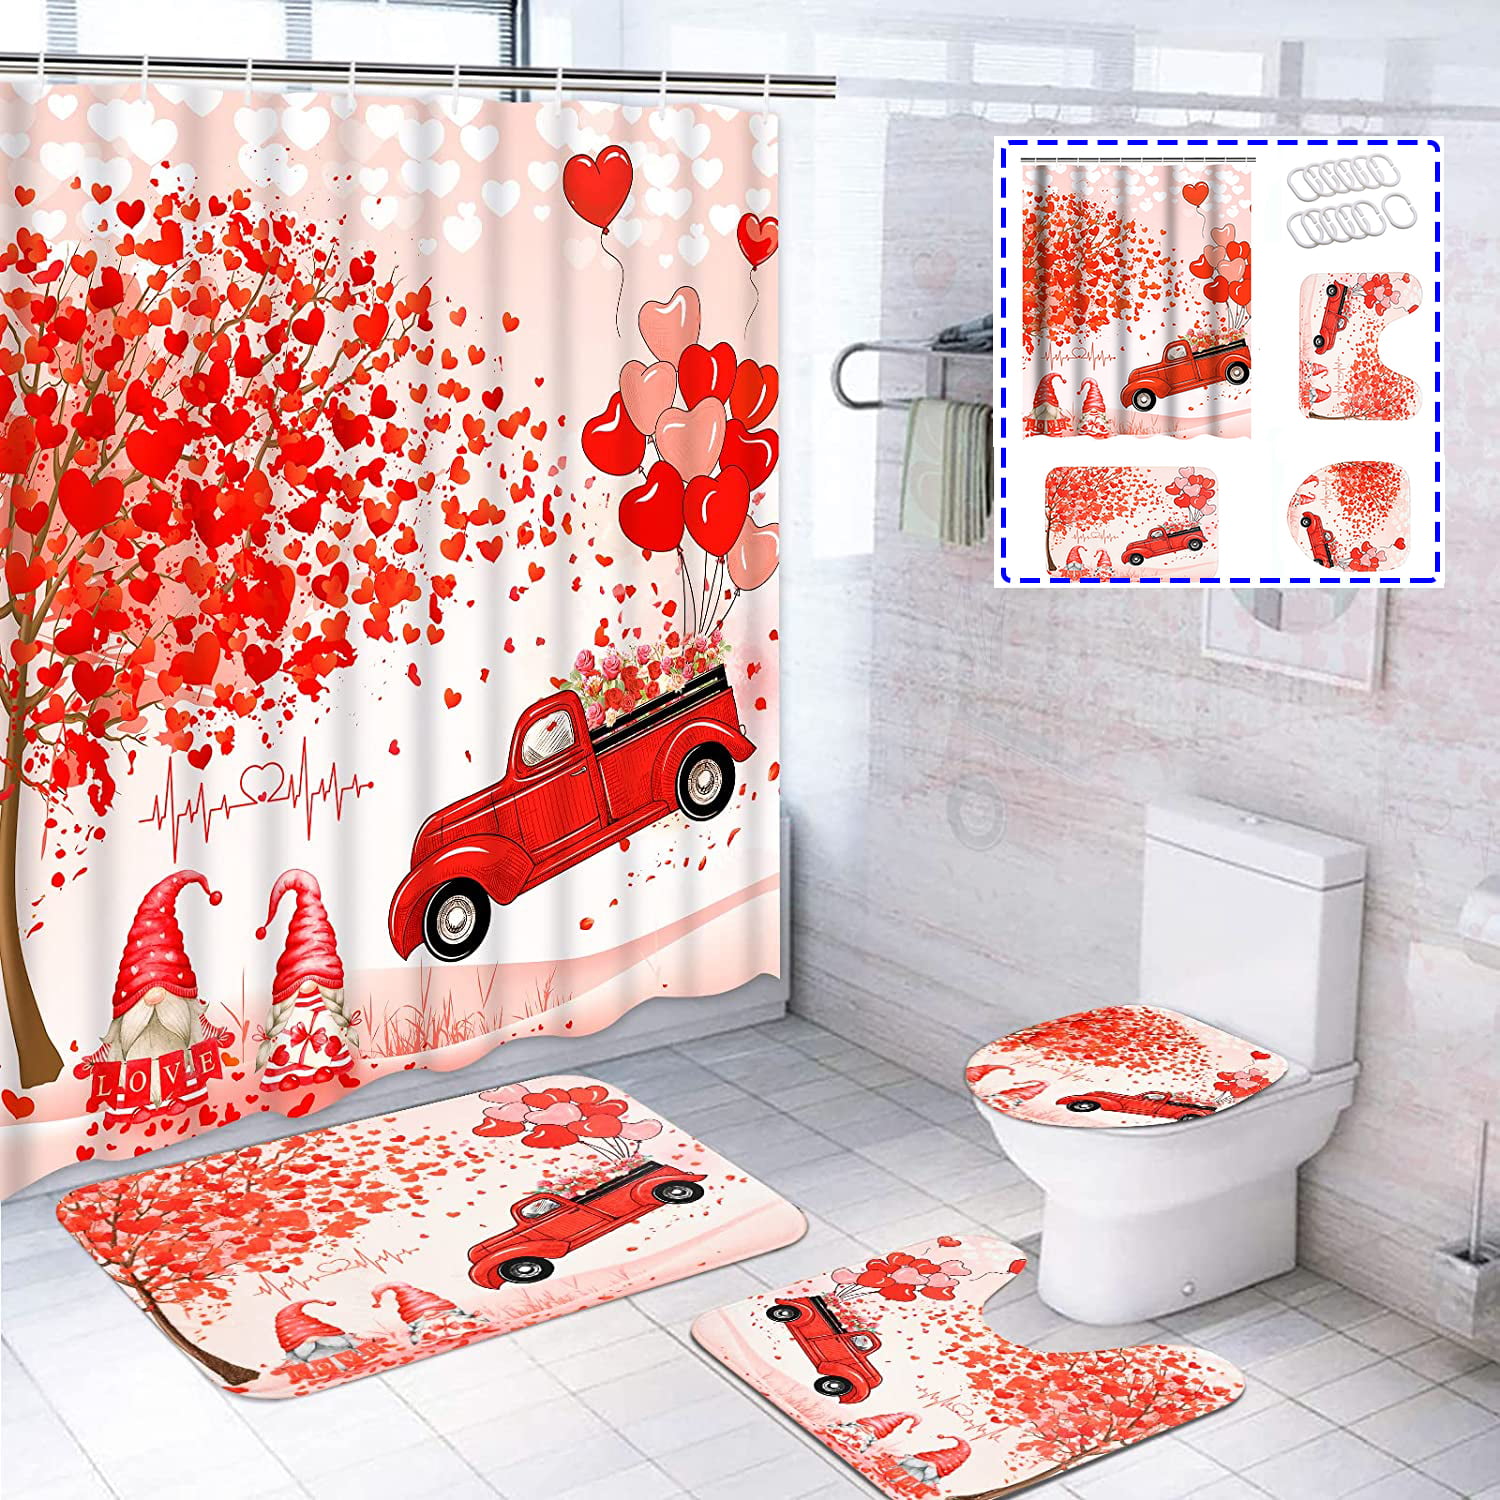 Hello Kitty Toilet Seat Cover Cushion And Rug Bathroom Mat Home Decor 4 Pcs Set 